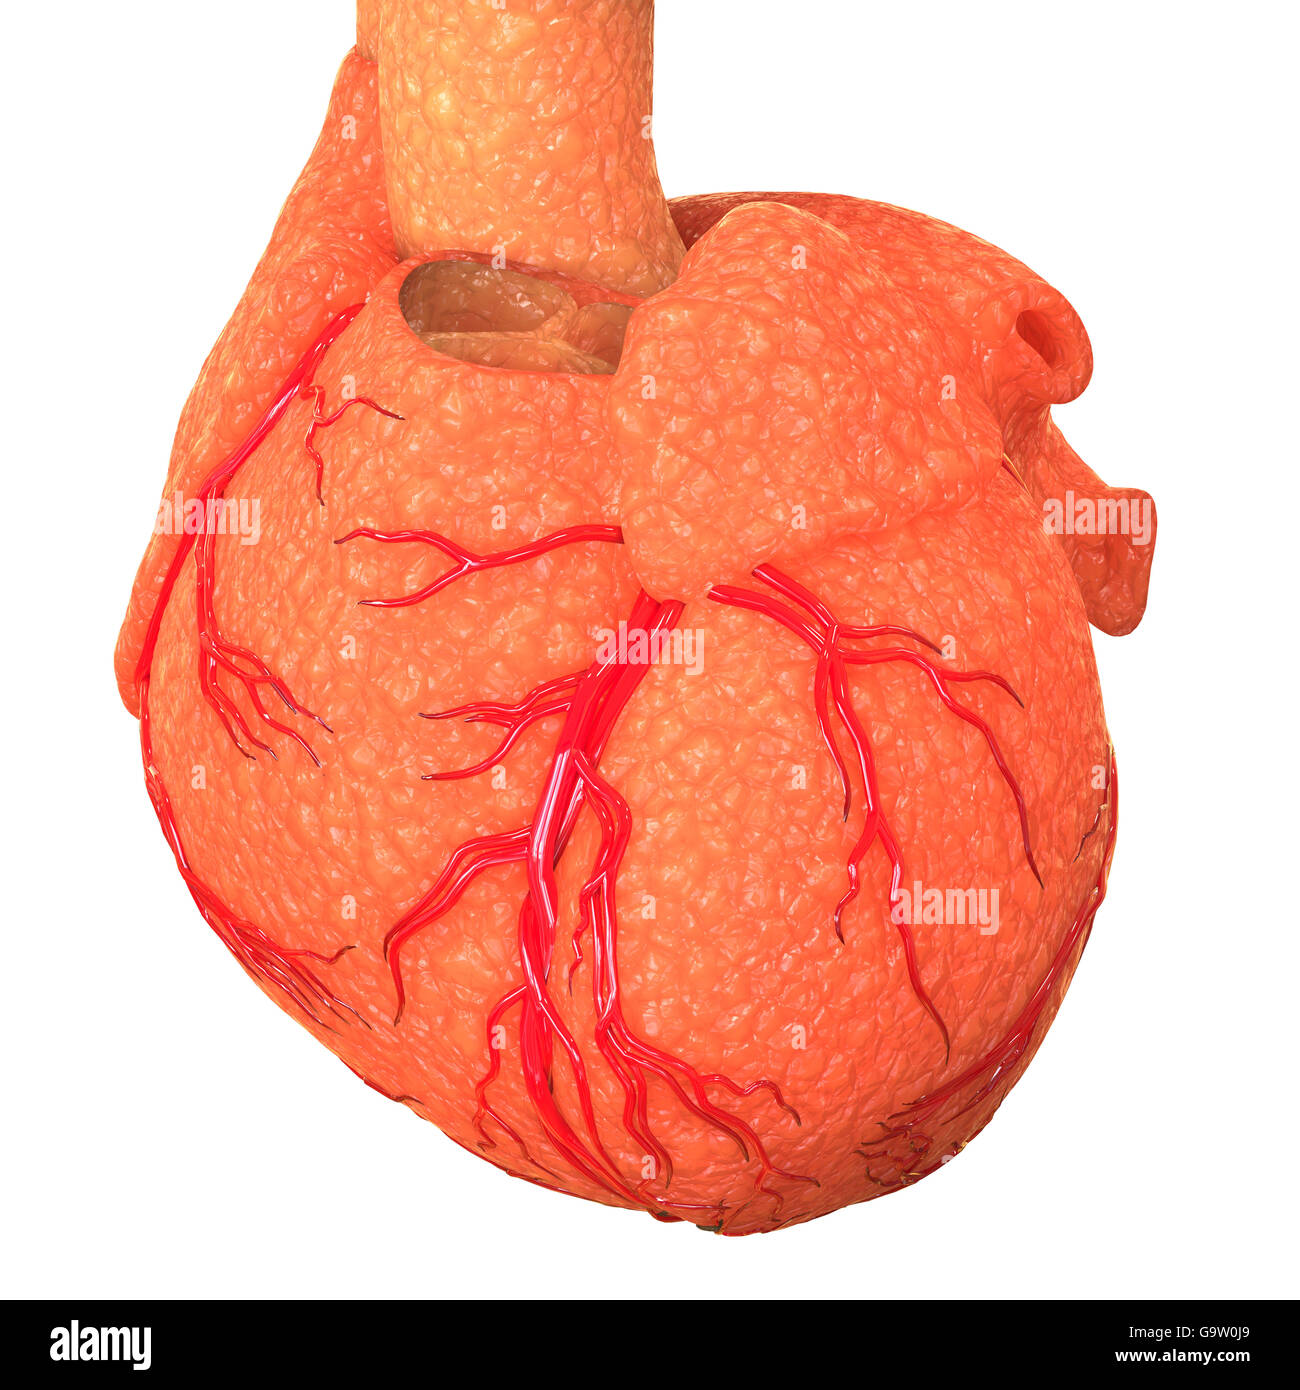 Human Cardiovascular System Heart Anatomy Stock Photo